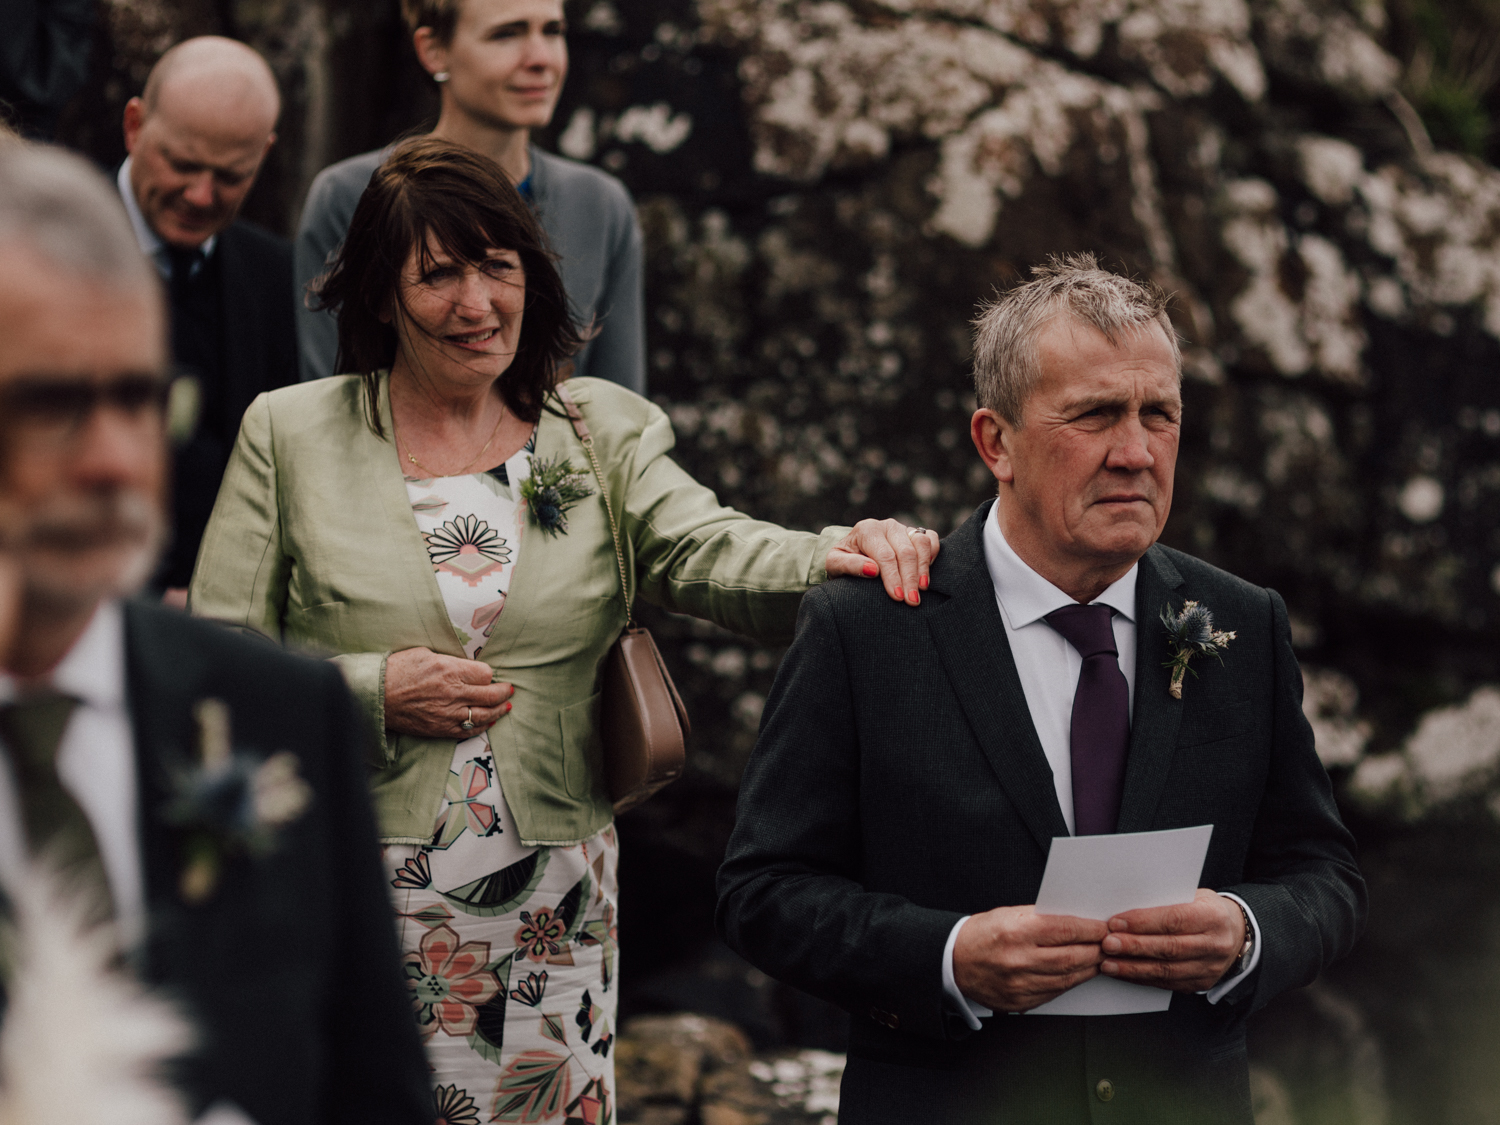 capyture-wedding-photographer-destination-nature-intimate-wedding-isle-of-skye-scotland-340